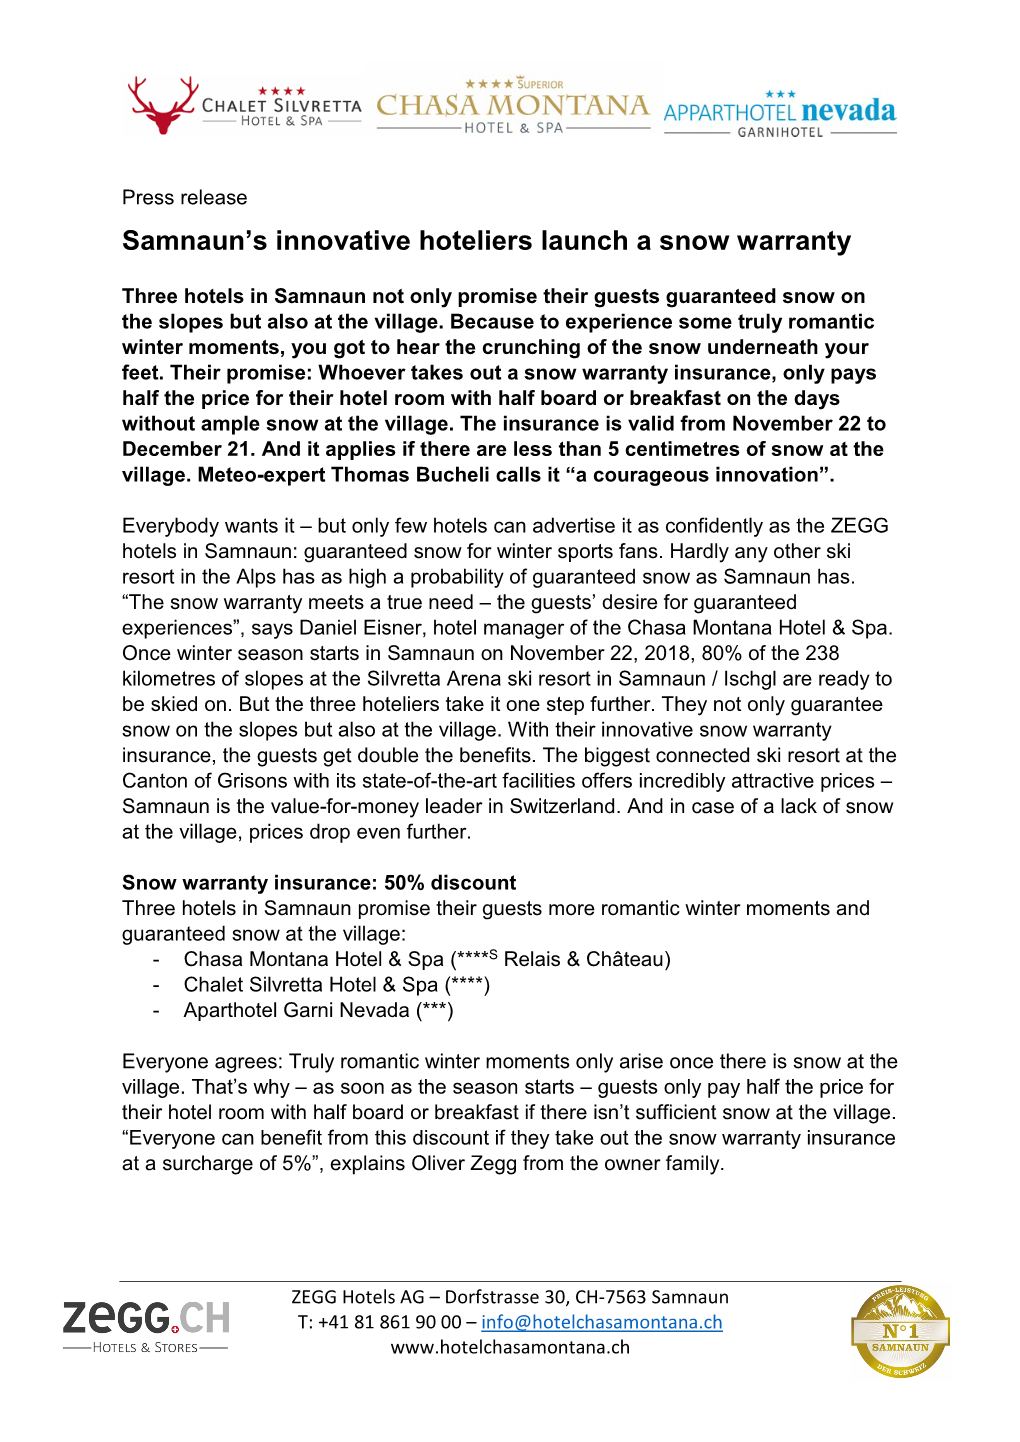 Samnaun's Innovative Hoteliers Launch a Snow Warranty